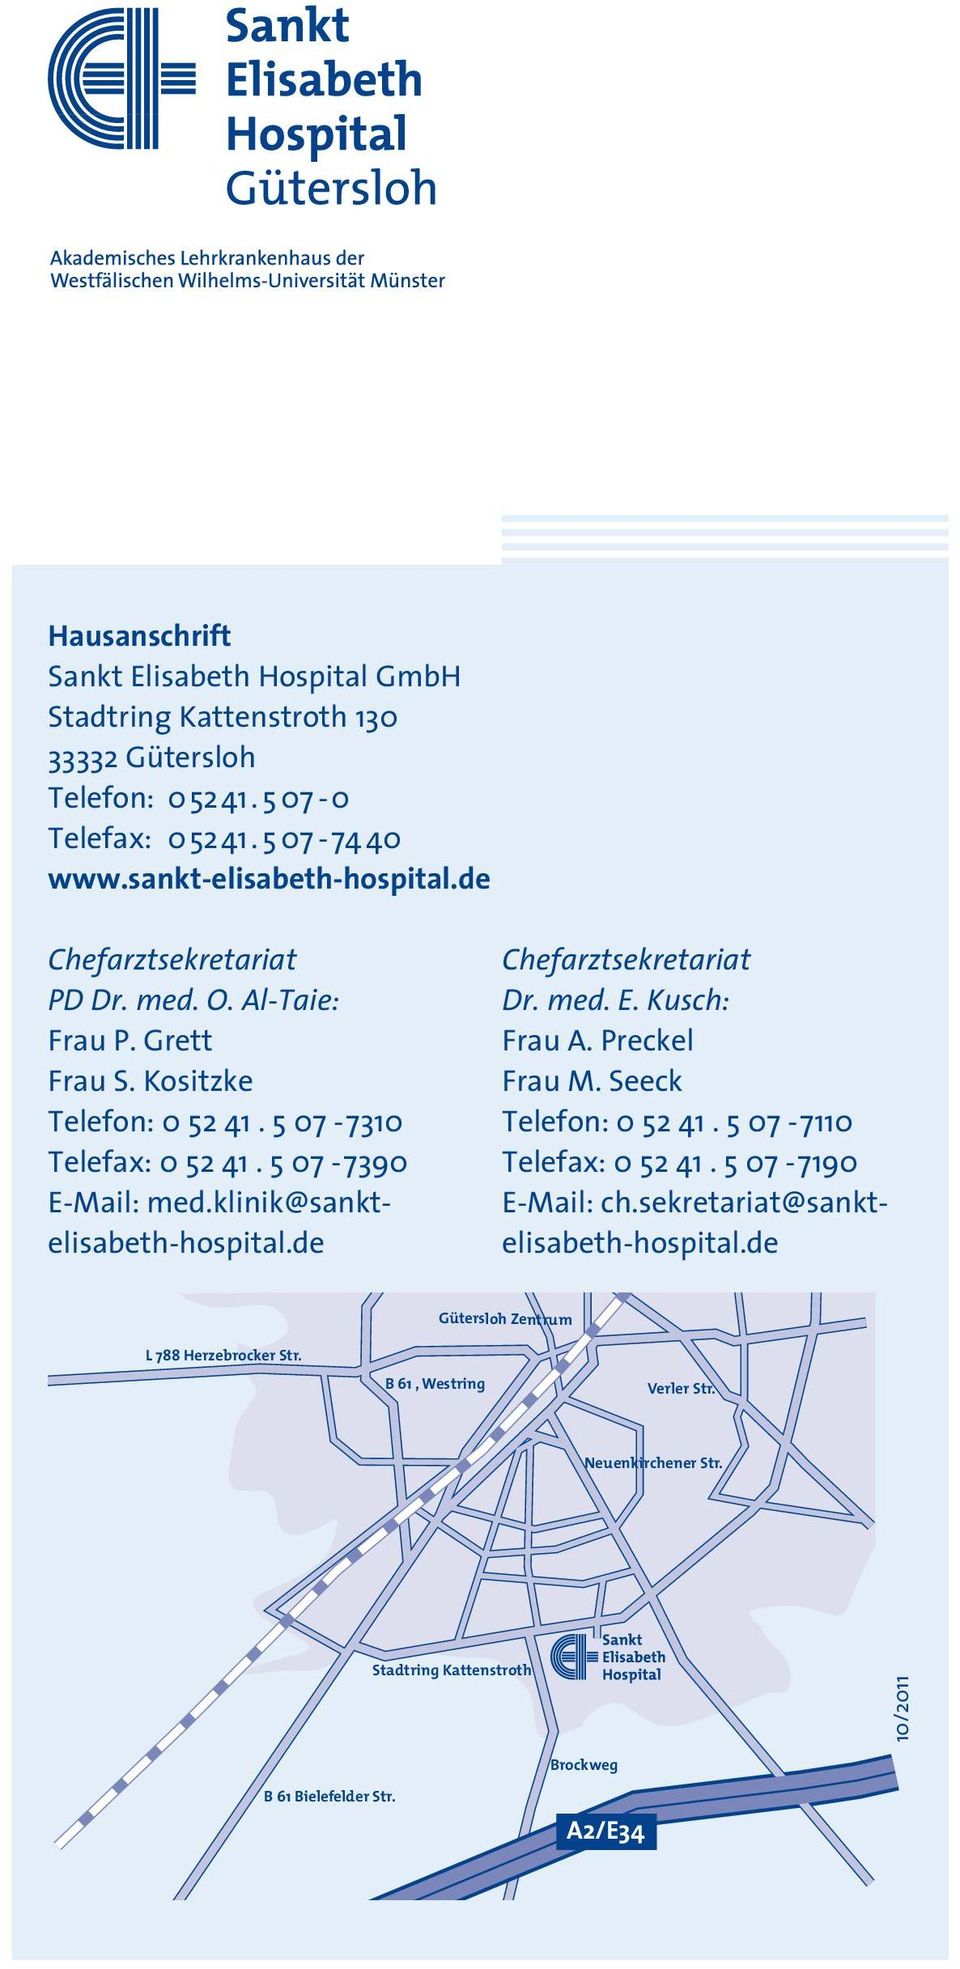 klinik@sanktelisabeth-hospital.de Chefarztsekretariat Dr. med. E. Kusch: Frau A. Preckel Frau M. Seeck Telefon: 0 52 41. 5 07-7110 Telefax: 0 52 41. 5 07-7190 E-Mail: ch.